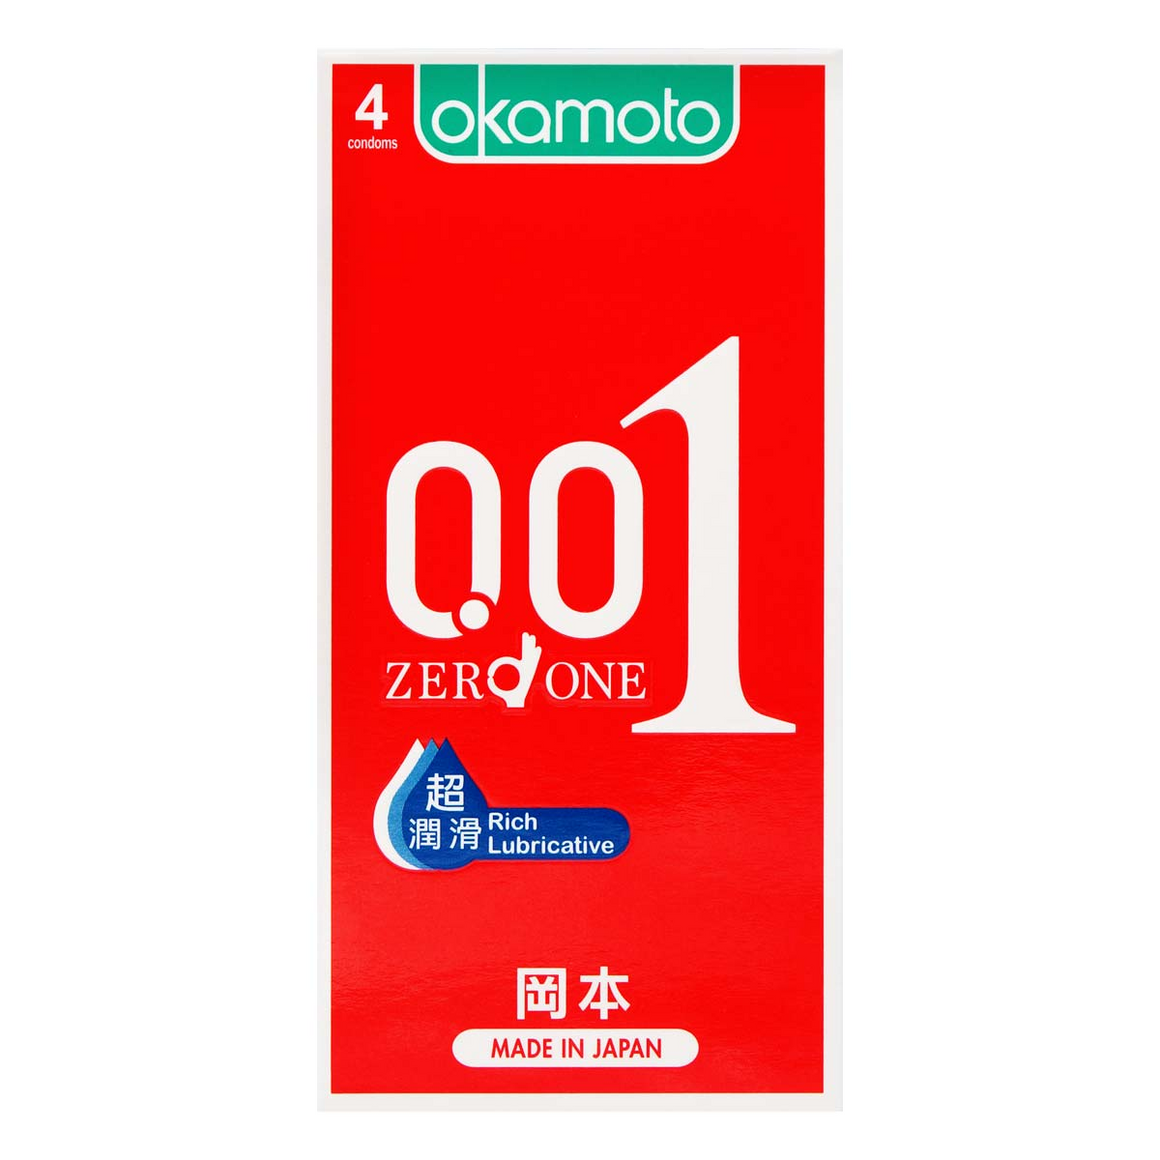 Okamoto 岡本 0.01 水性聚氨酯超潤滑 4 片裝 PU 安全套